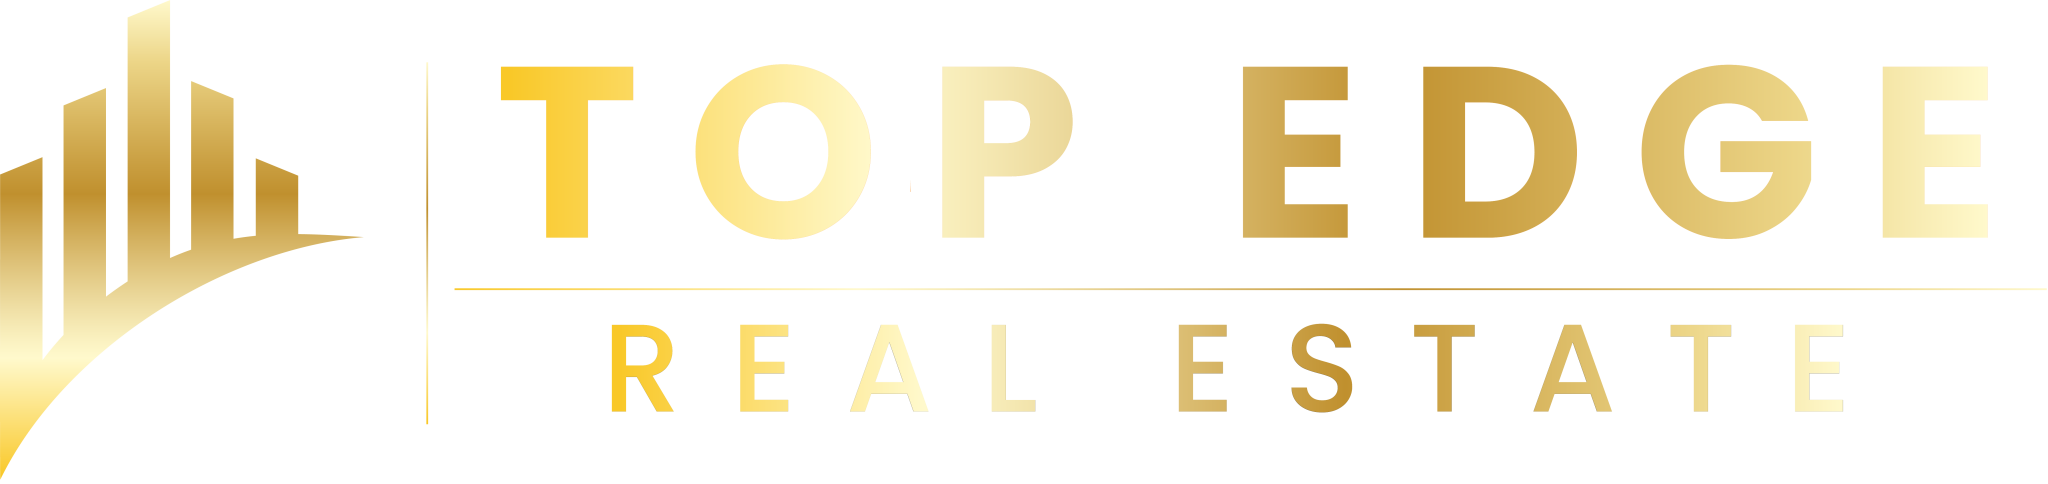 Top Edge Real Estate - TRUGANINA